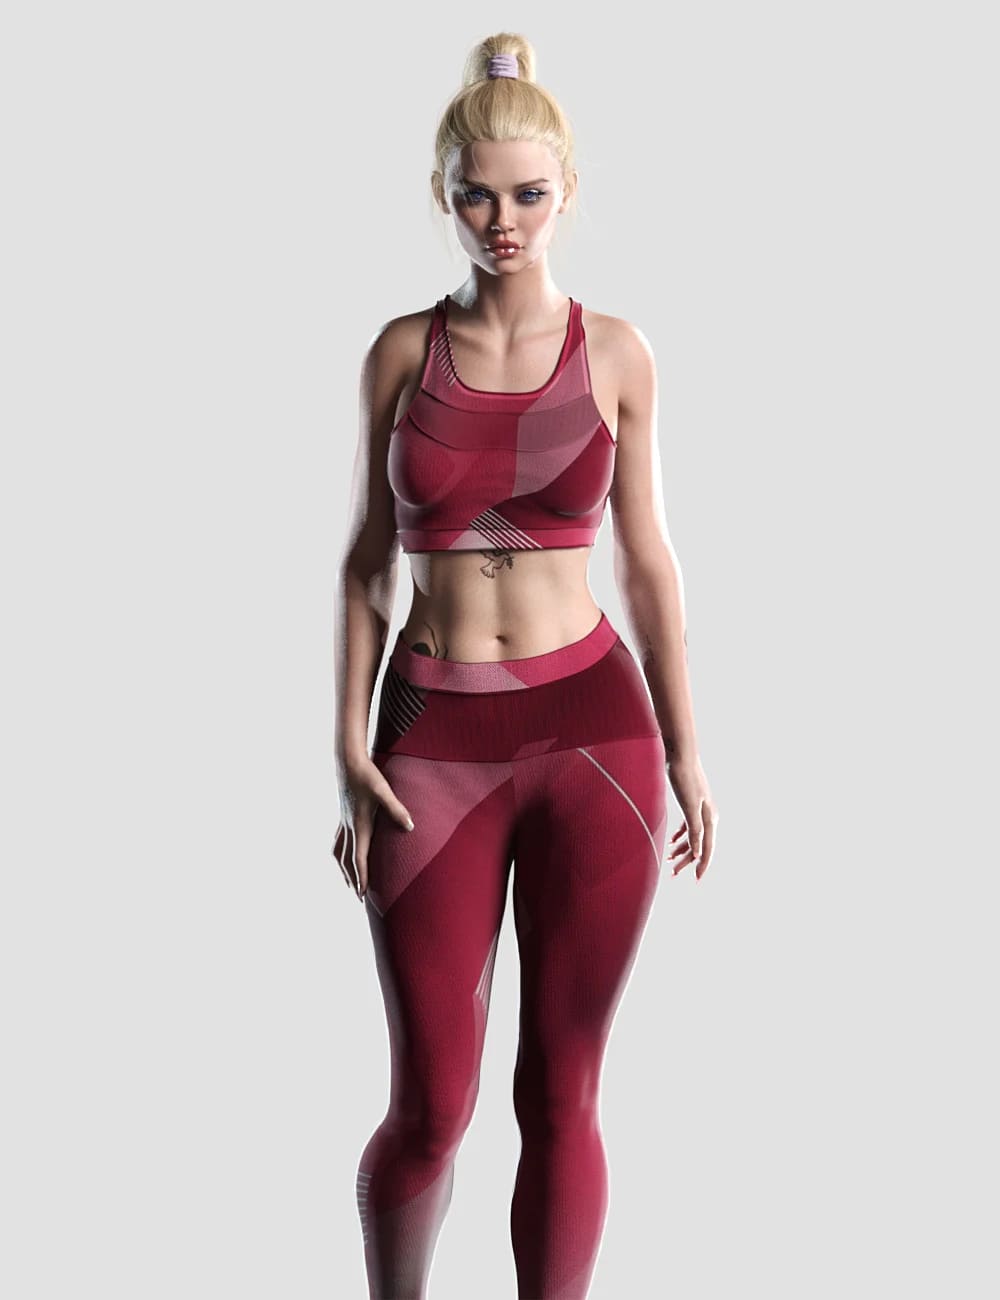 Knit Sports Outfit Textures_DAZ3DDL